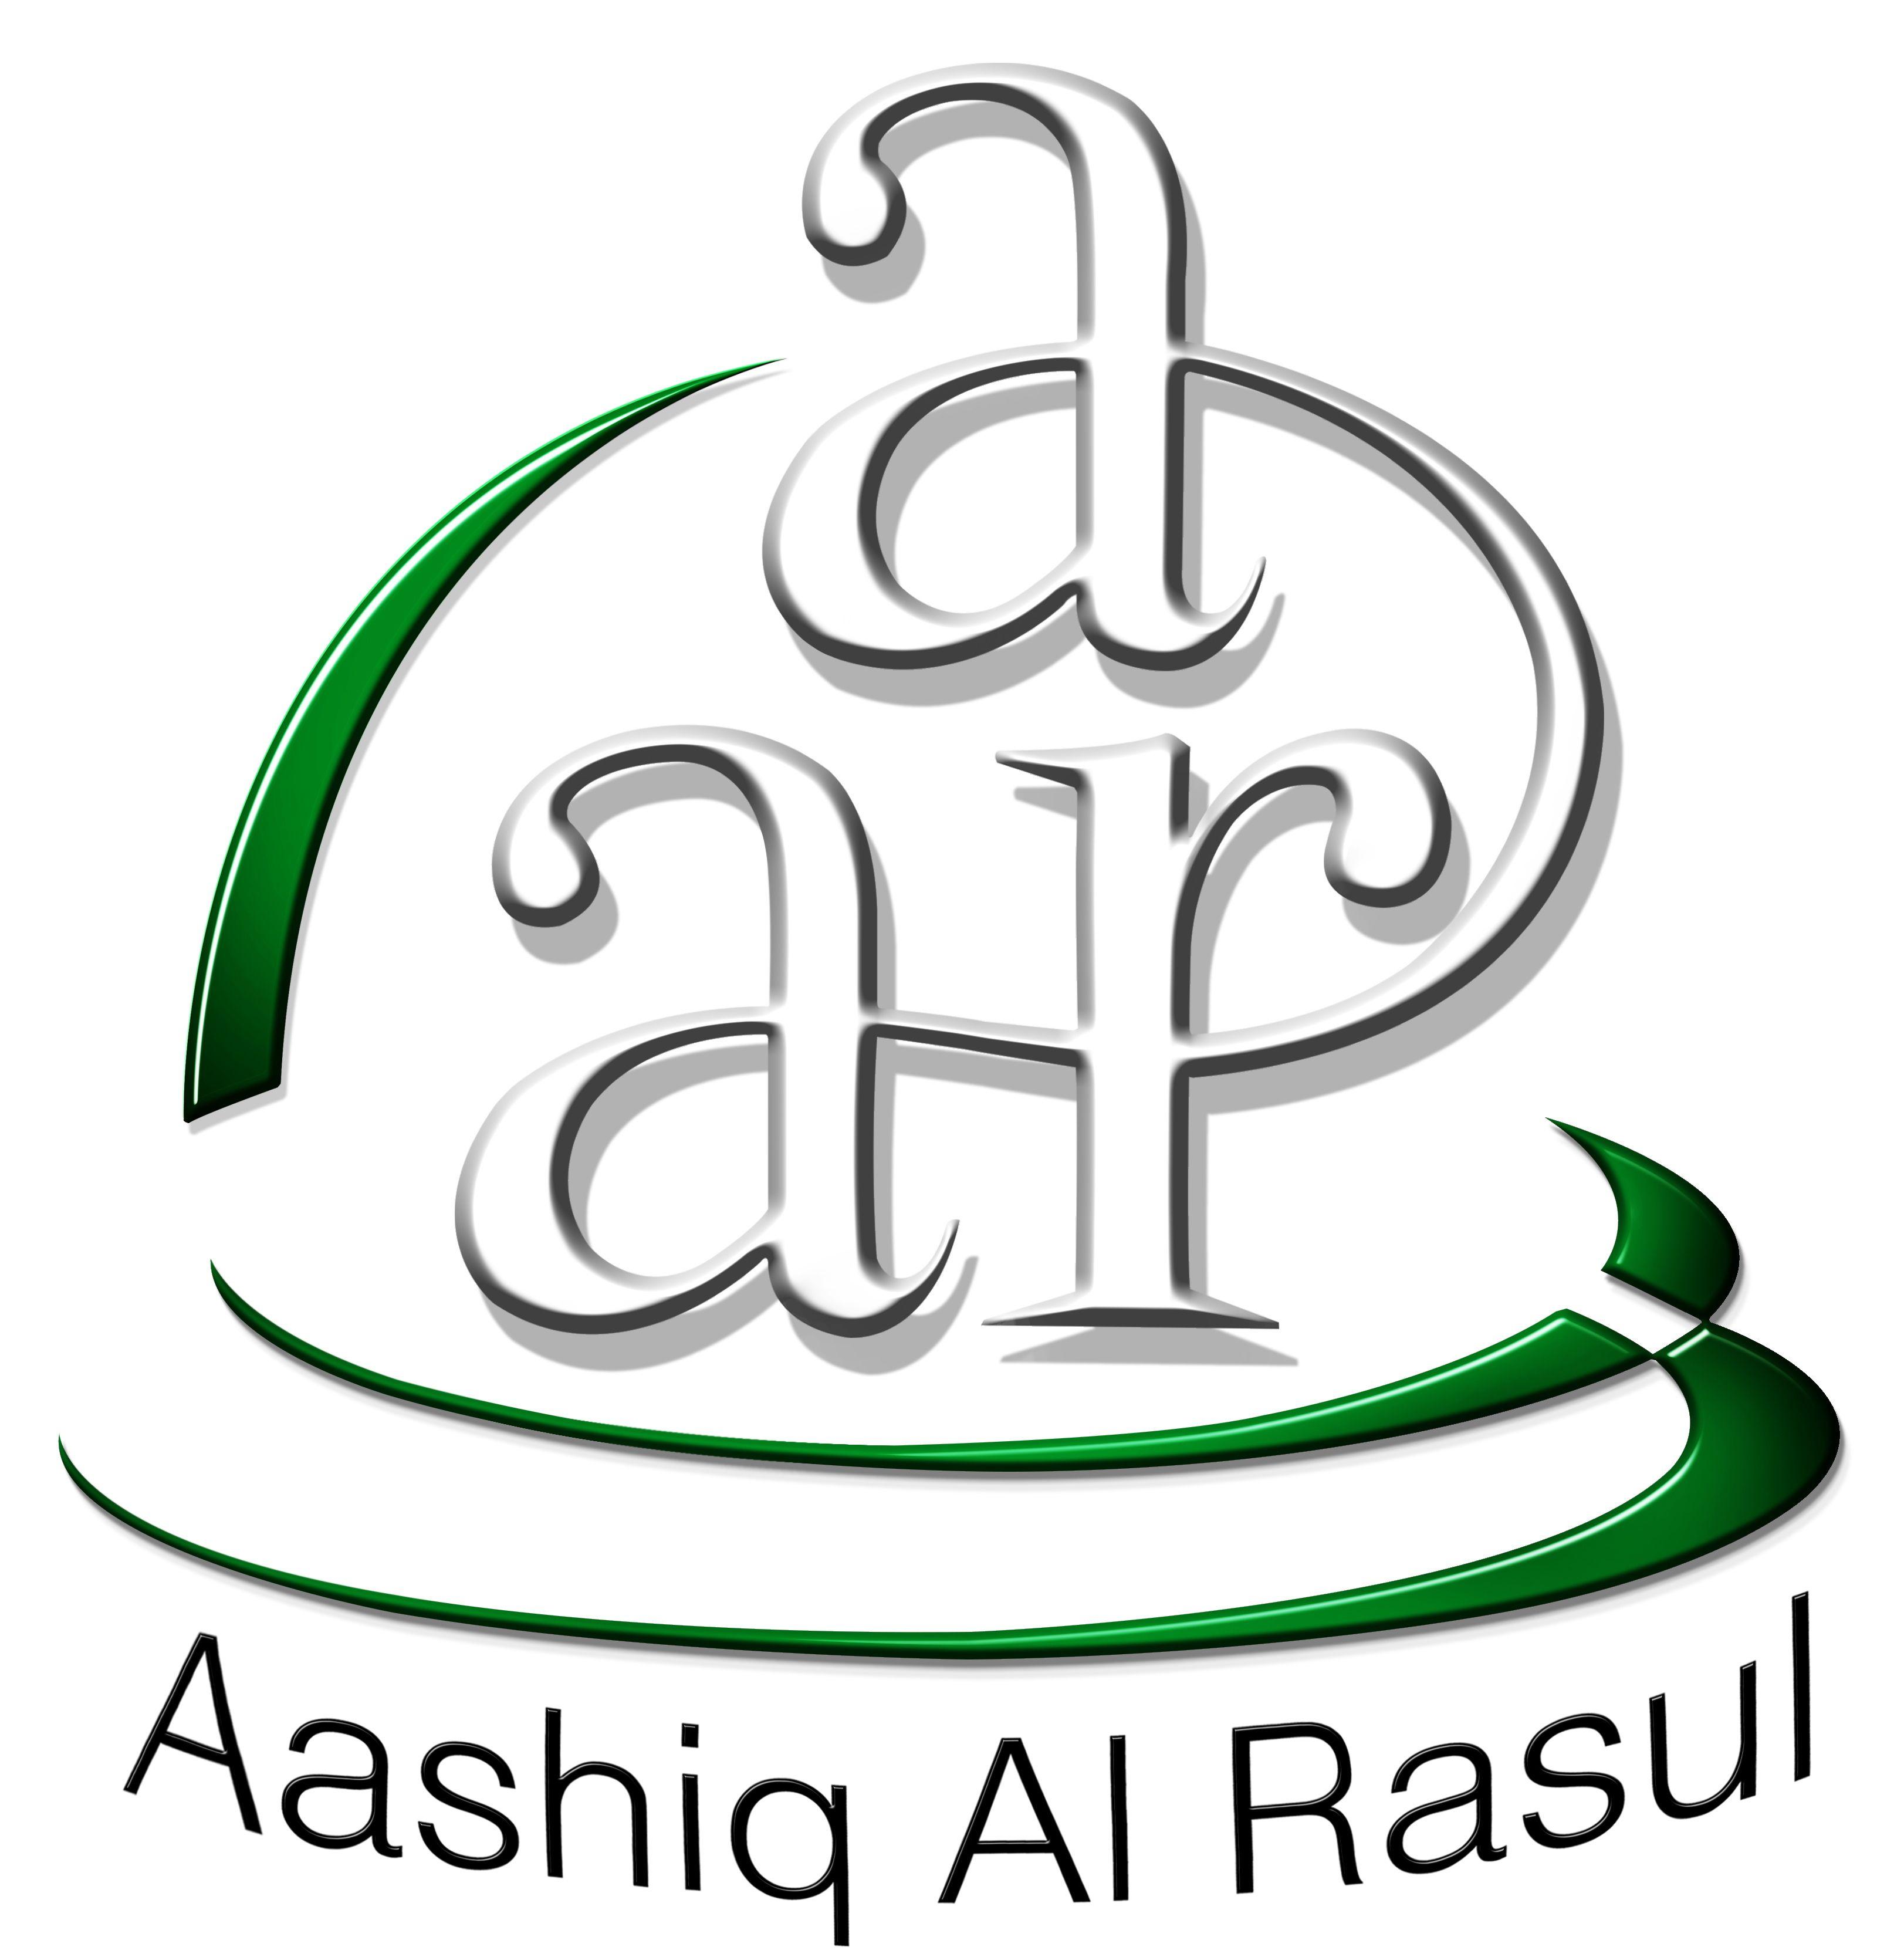 AAR Logo - Aashiq Al Rasul at Dizzyjam